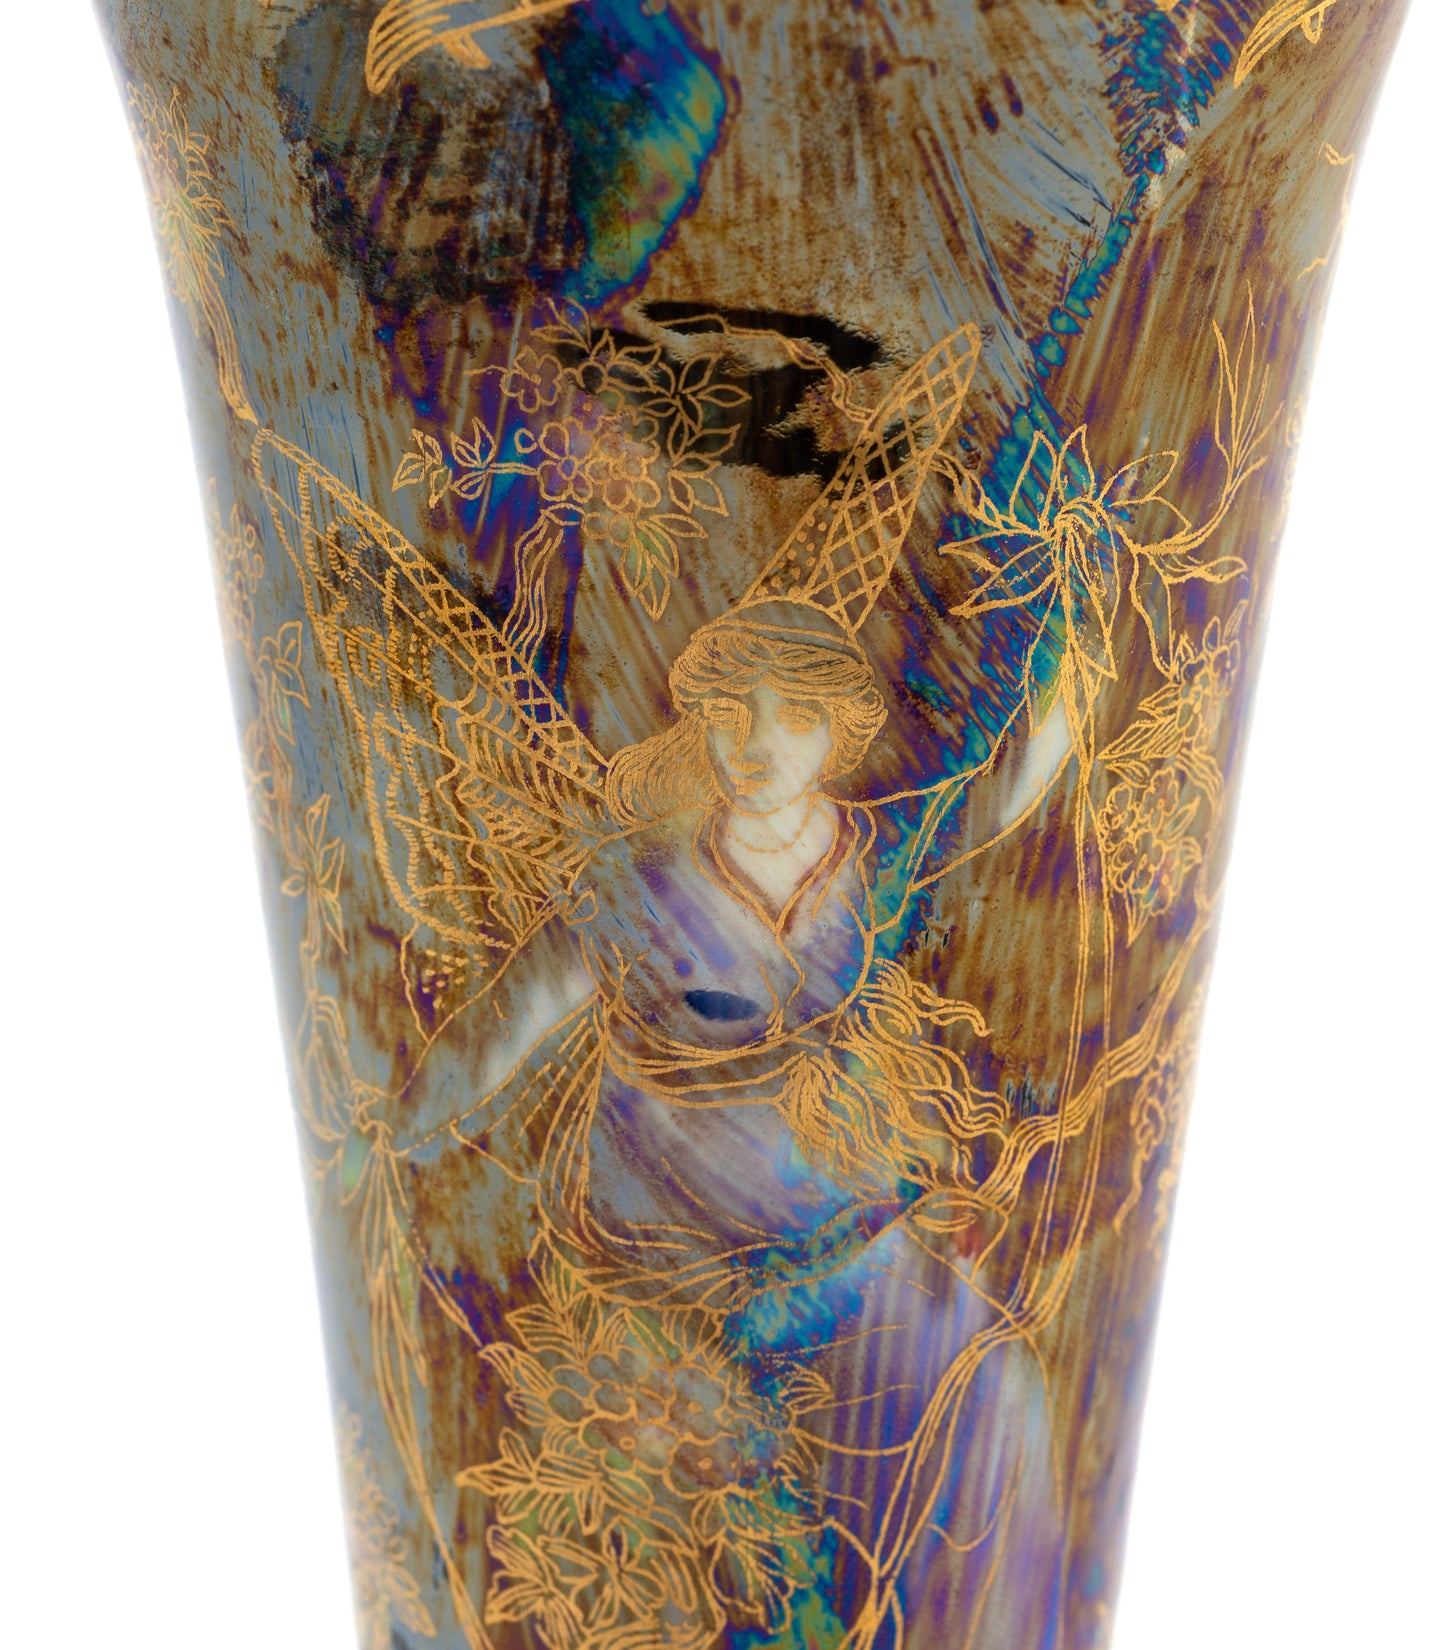 Fine Wedgwood Fairyland Lustre Butterfly Women Vase by Daisy Makeig Jones c1920 (Code 2125)